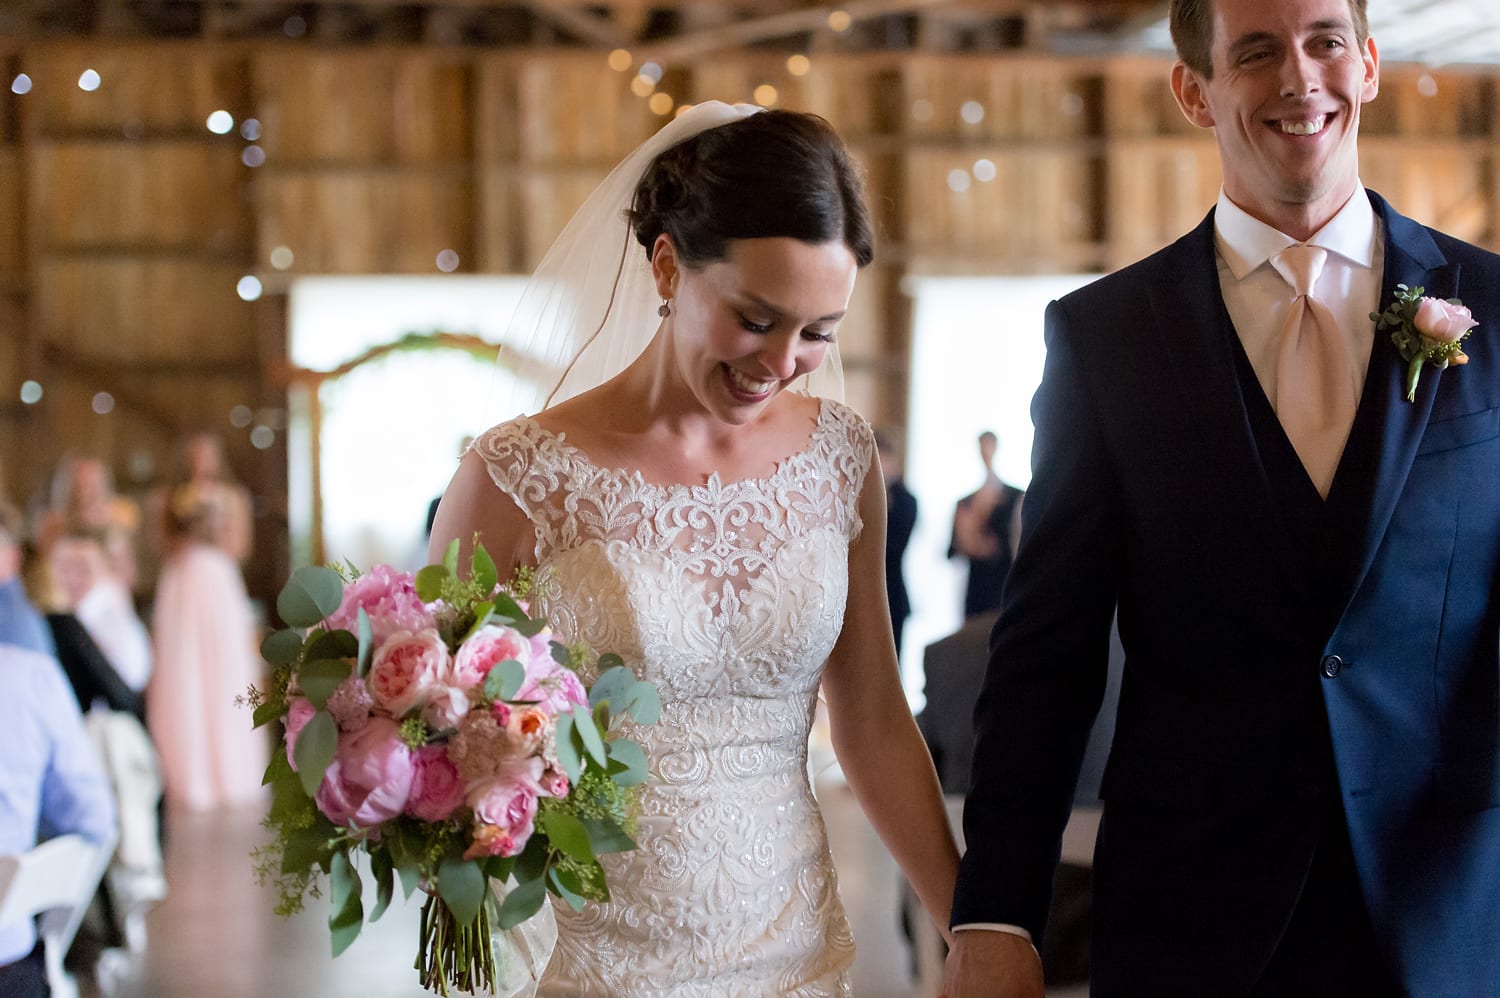 Bride and groom recessional at Maplehurst Farm wedding venue